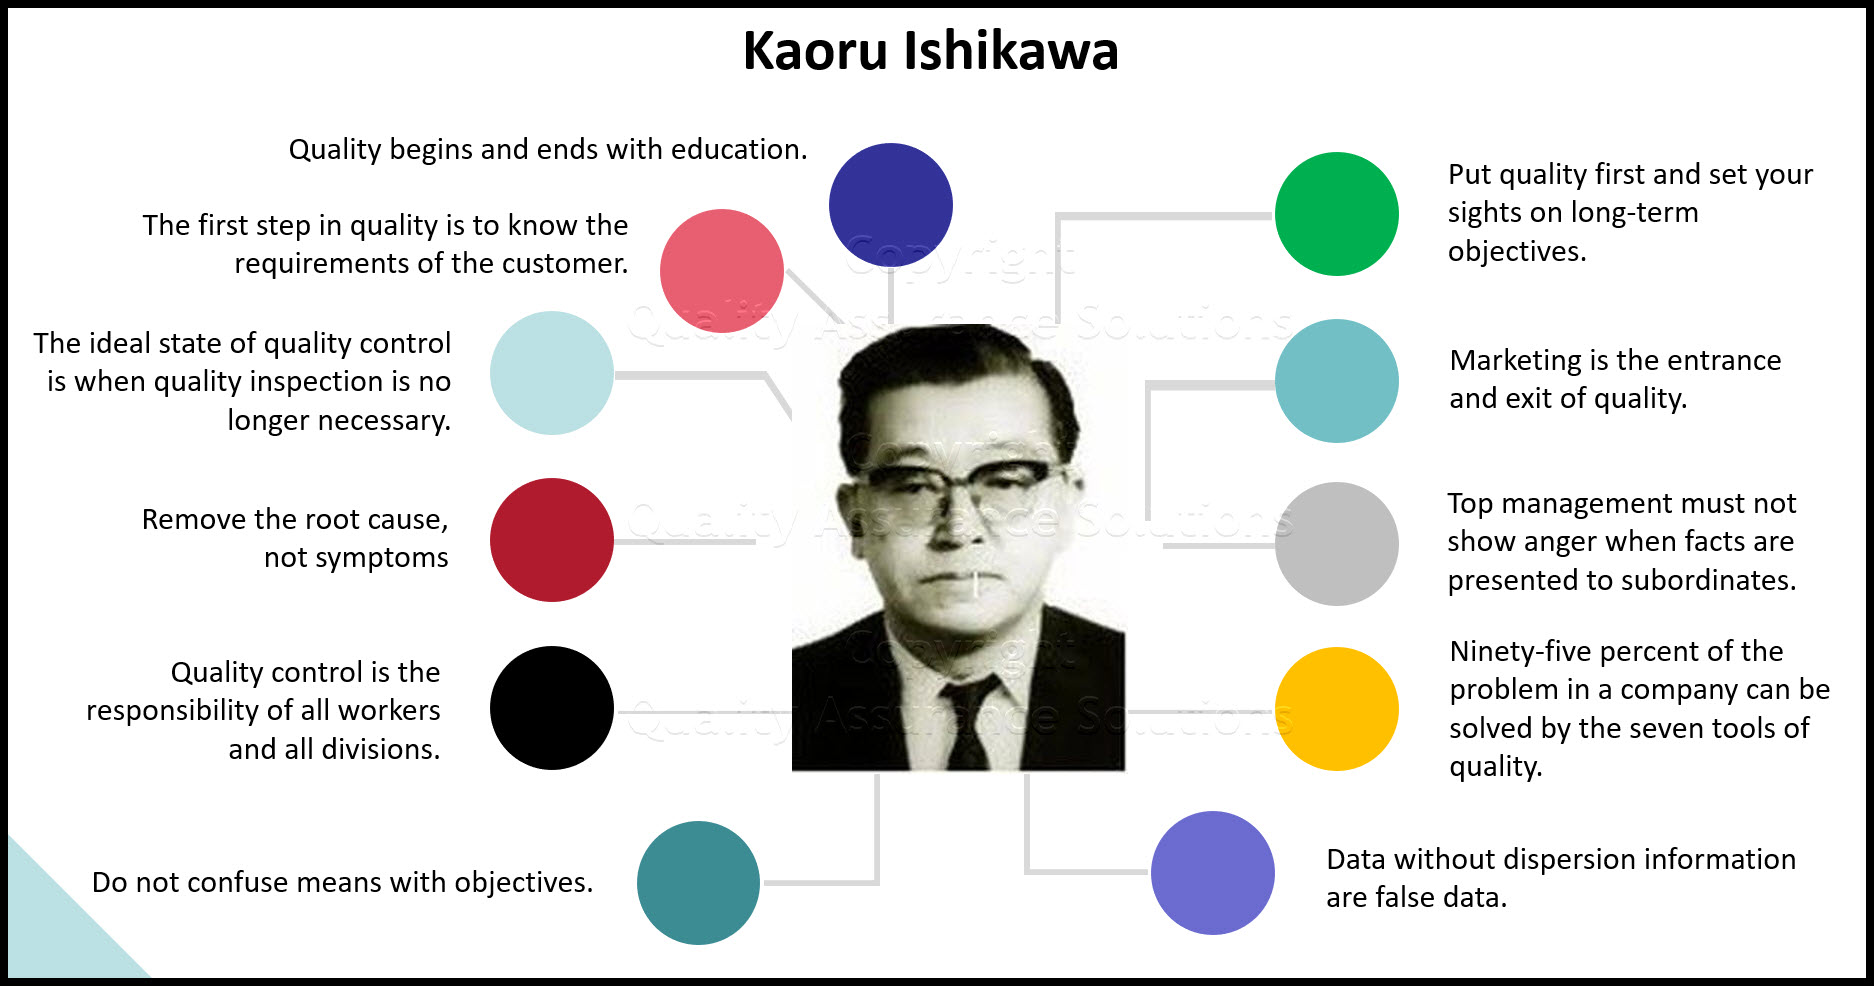 Kaoru Ishikawa is a pioneer in quality control activities in Japan